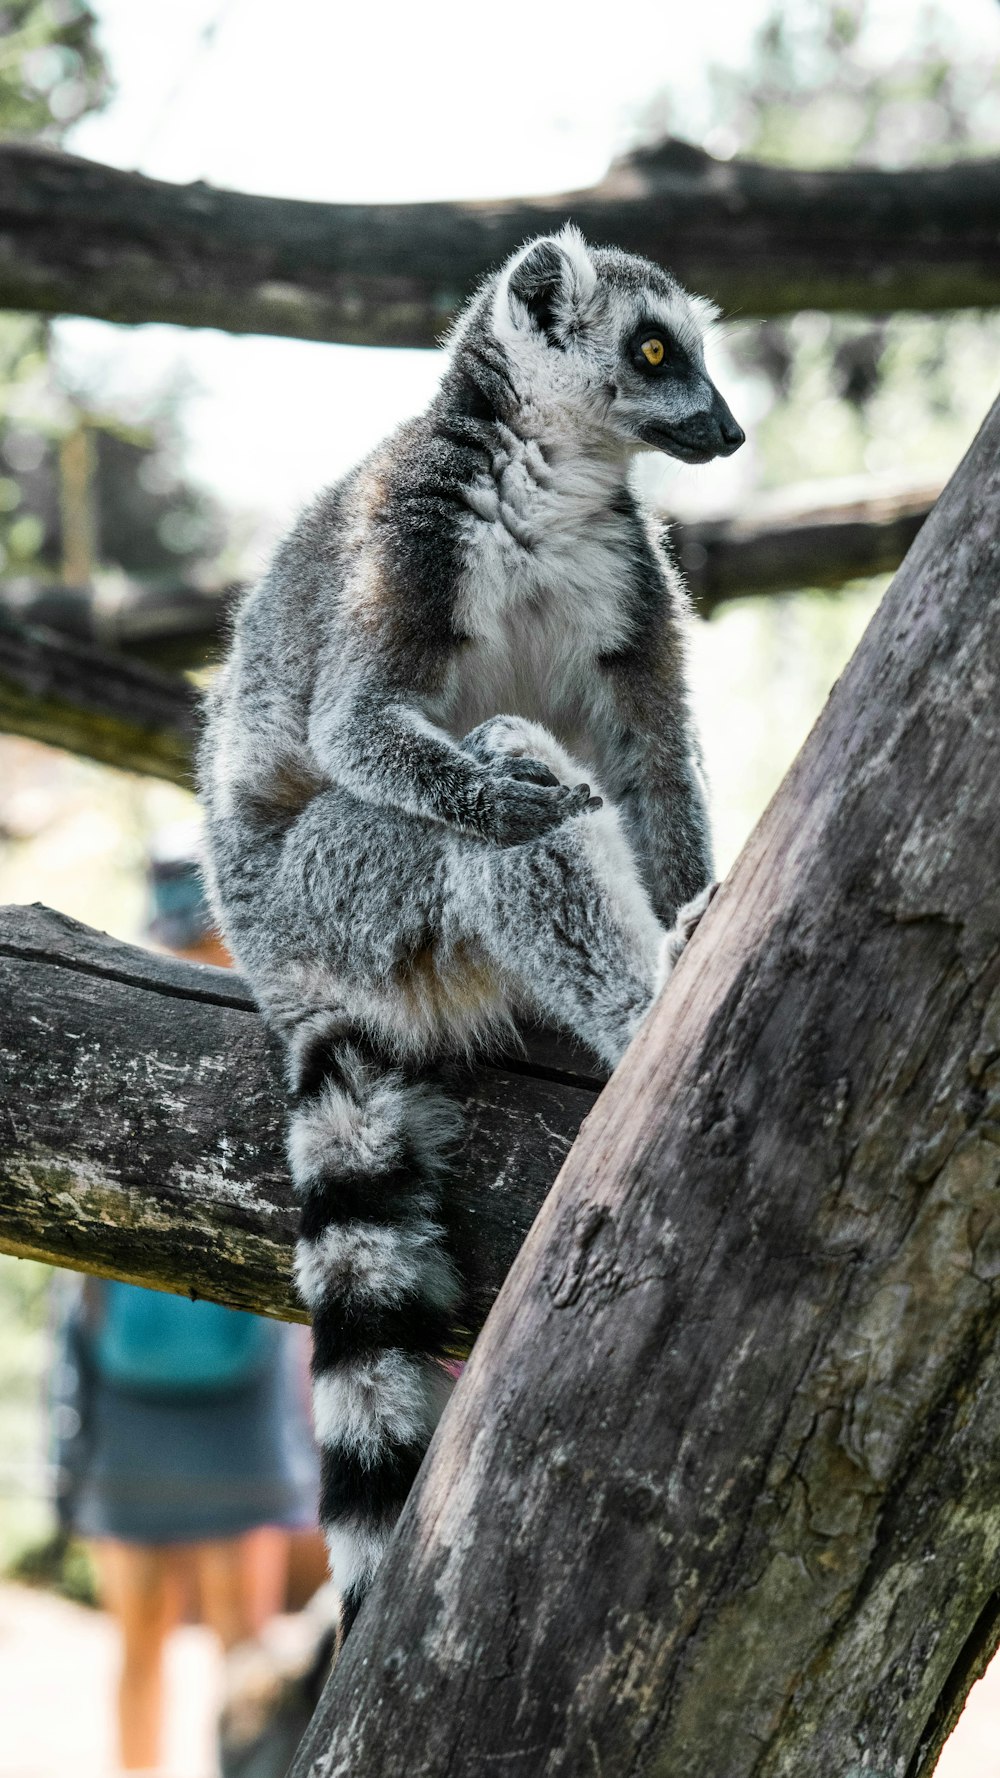 lemur siting on tree branch during daytime